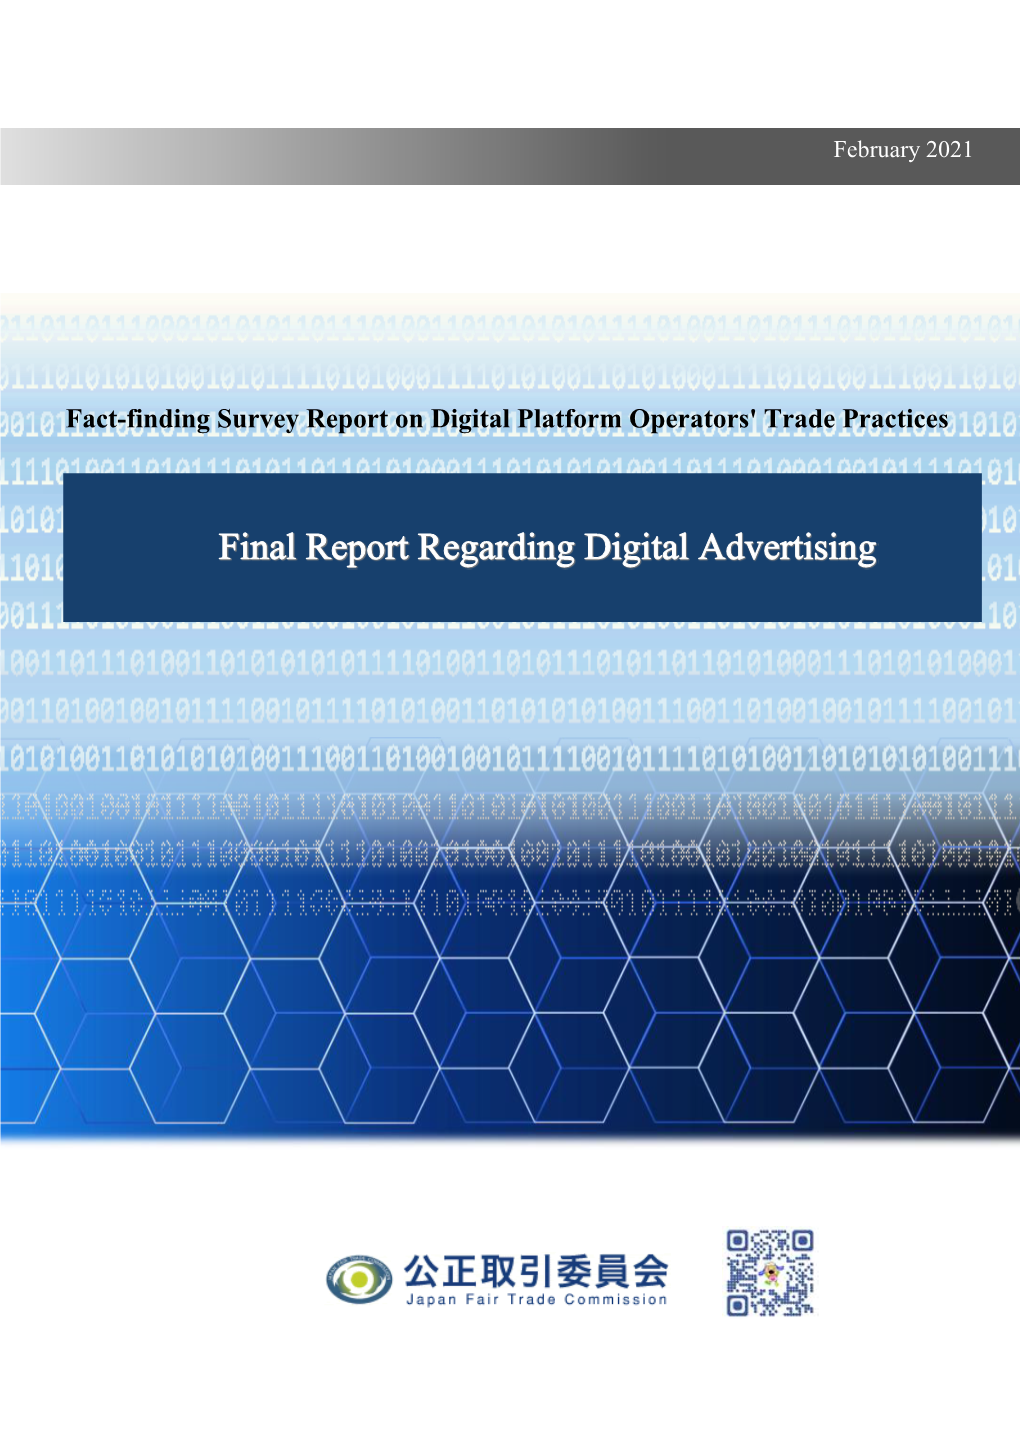 Fact-Finding Survey Report on Digital Platform Operators' Trade Practices